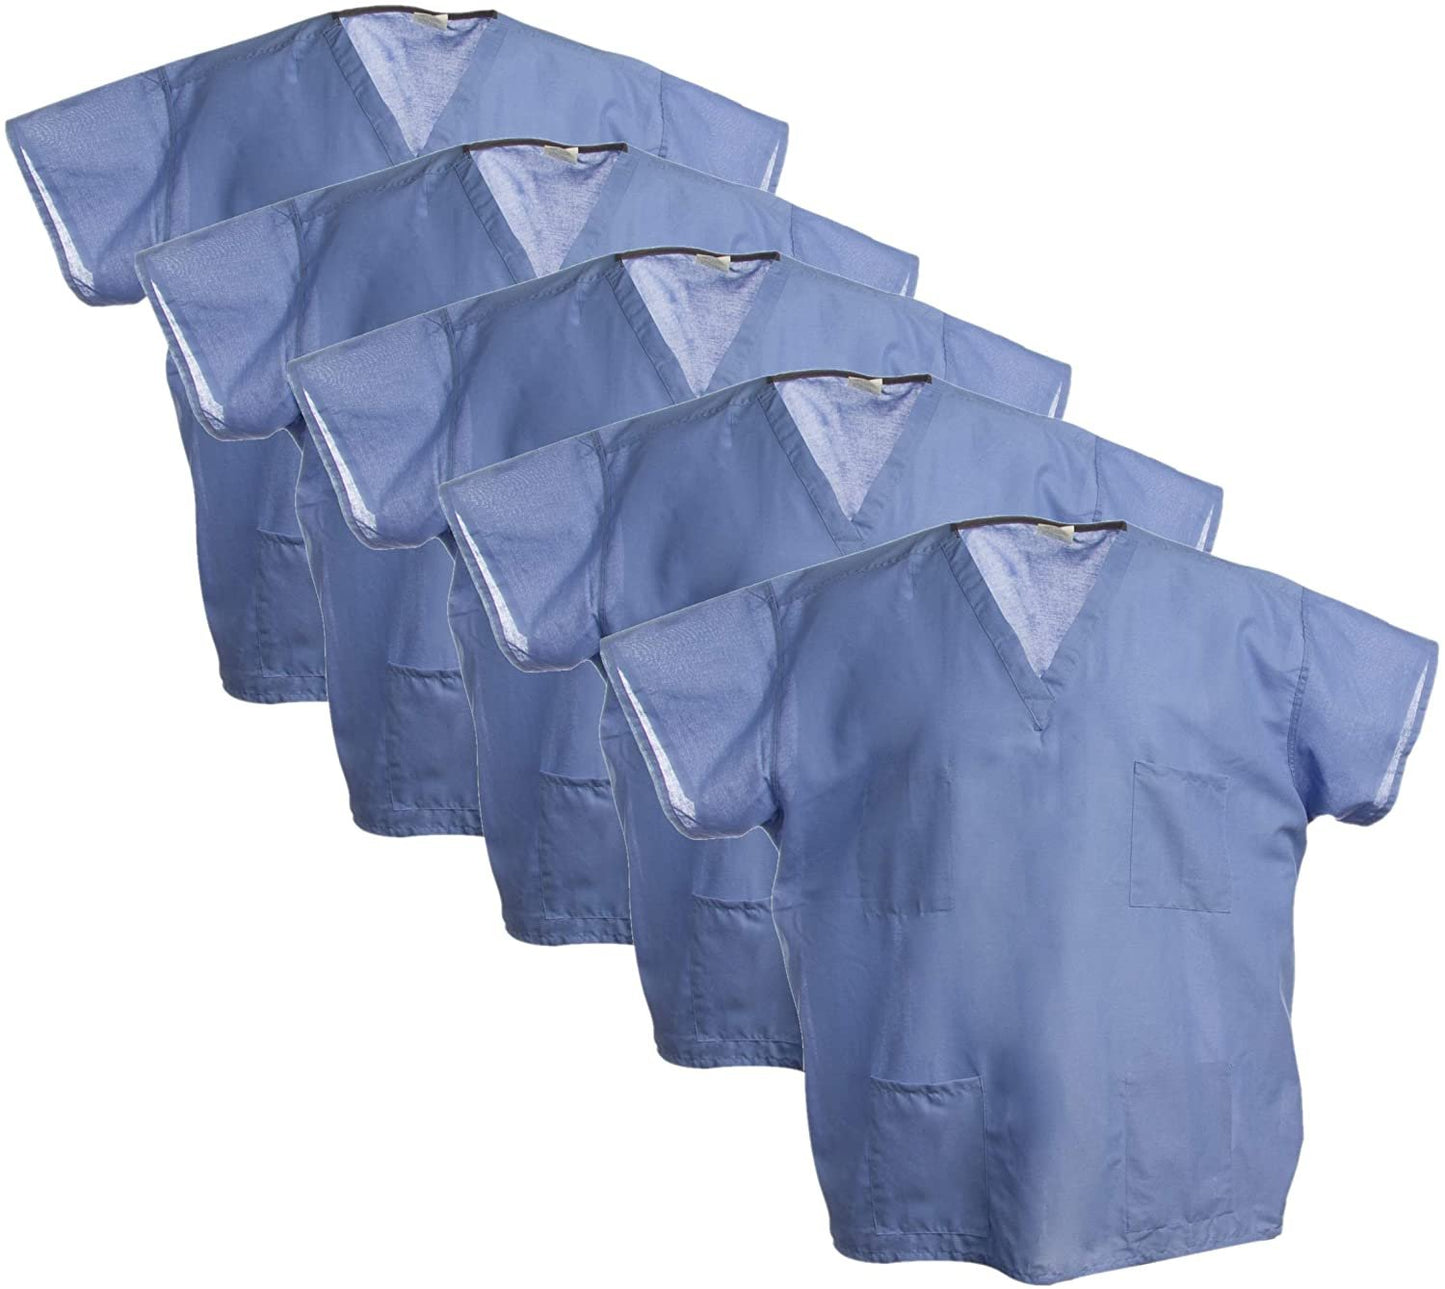 Encompass (5 Pack Blue Hospital Scrubs Tops Medical Nursing Surgical Unisex Medical Shirt for Men and Women, Large / X-Large